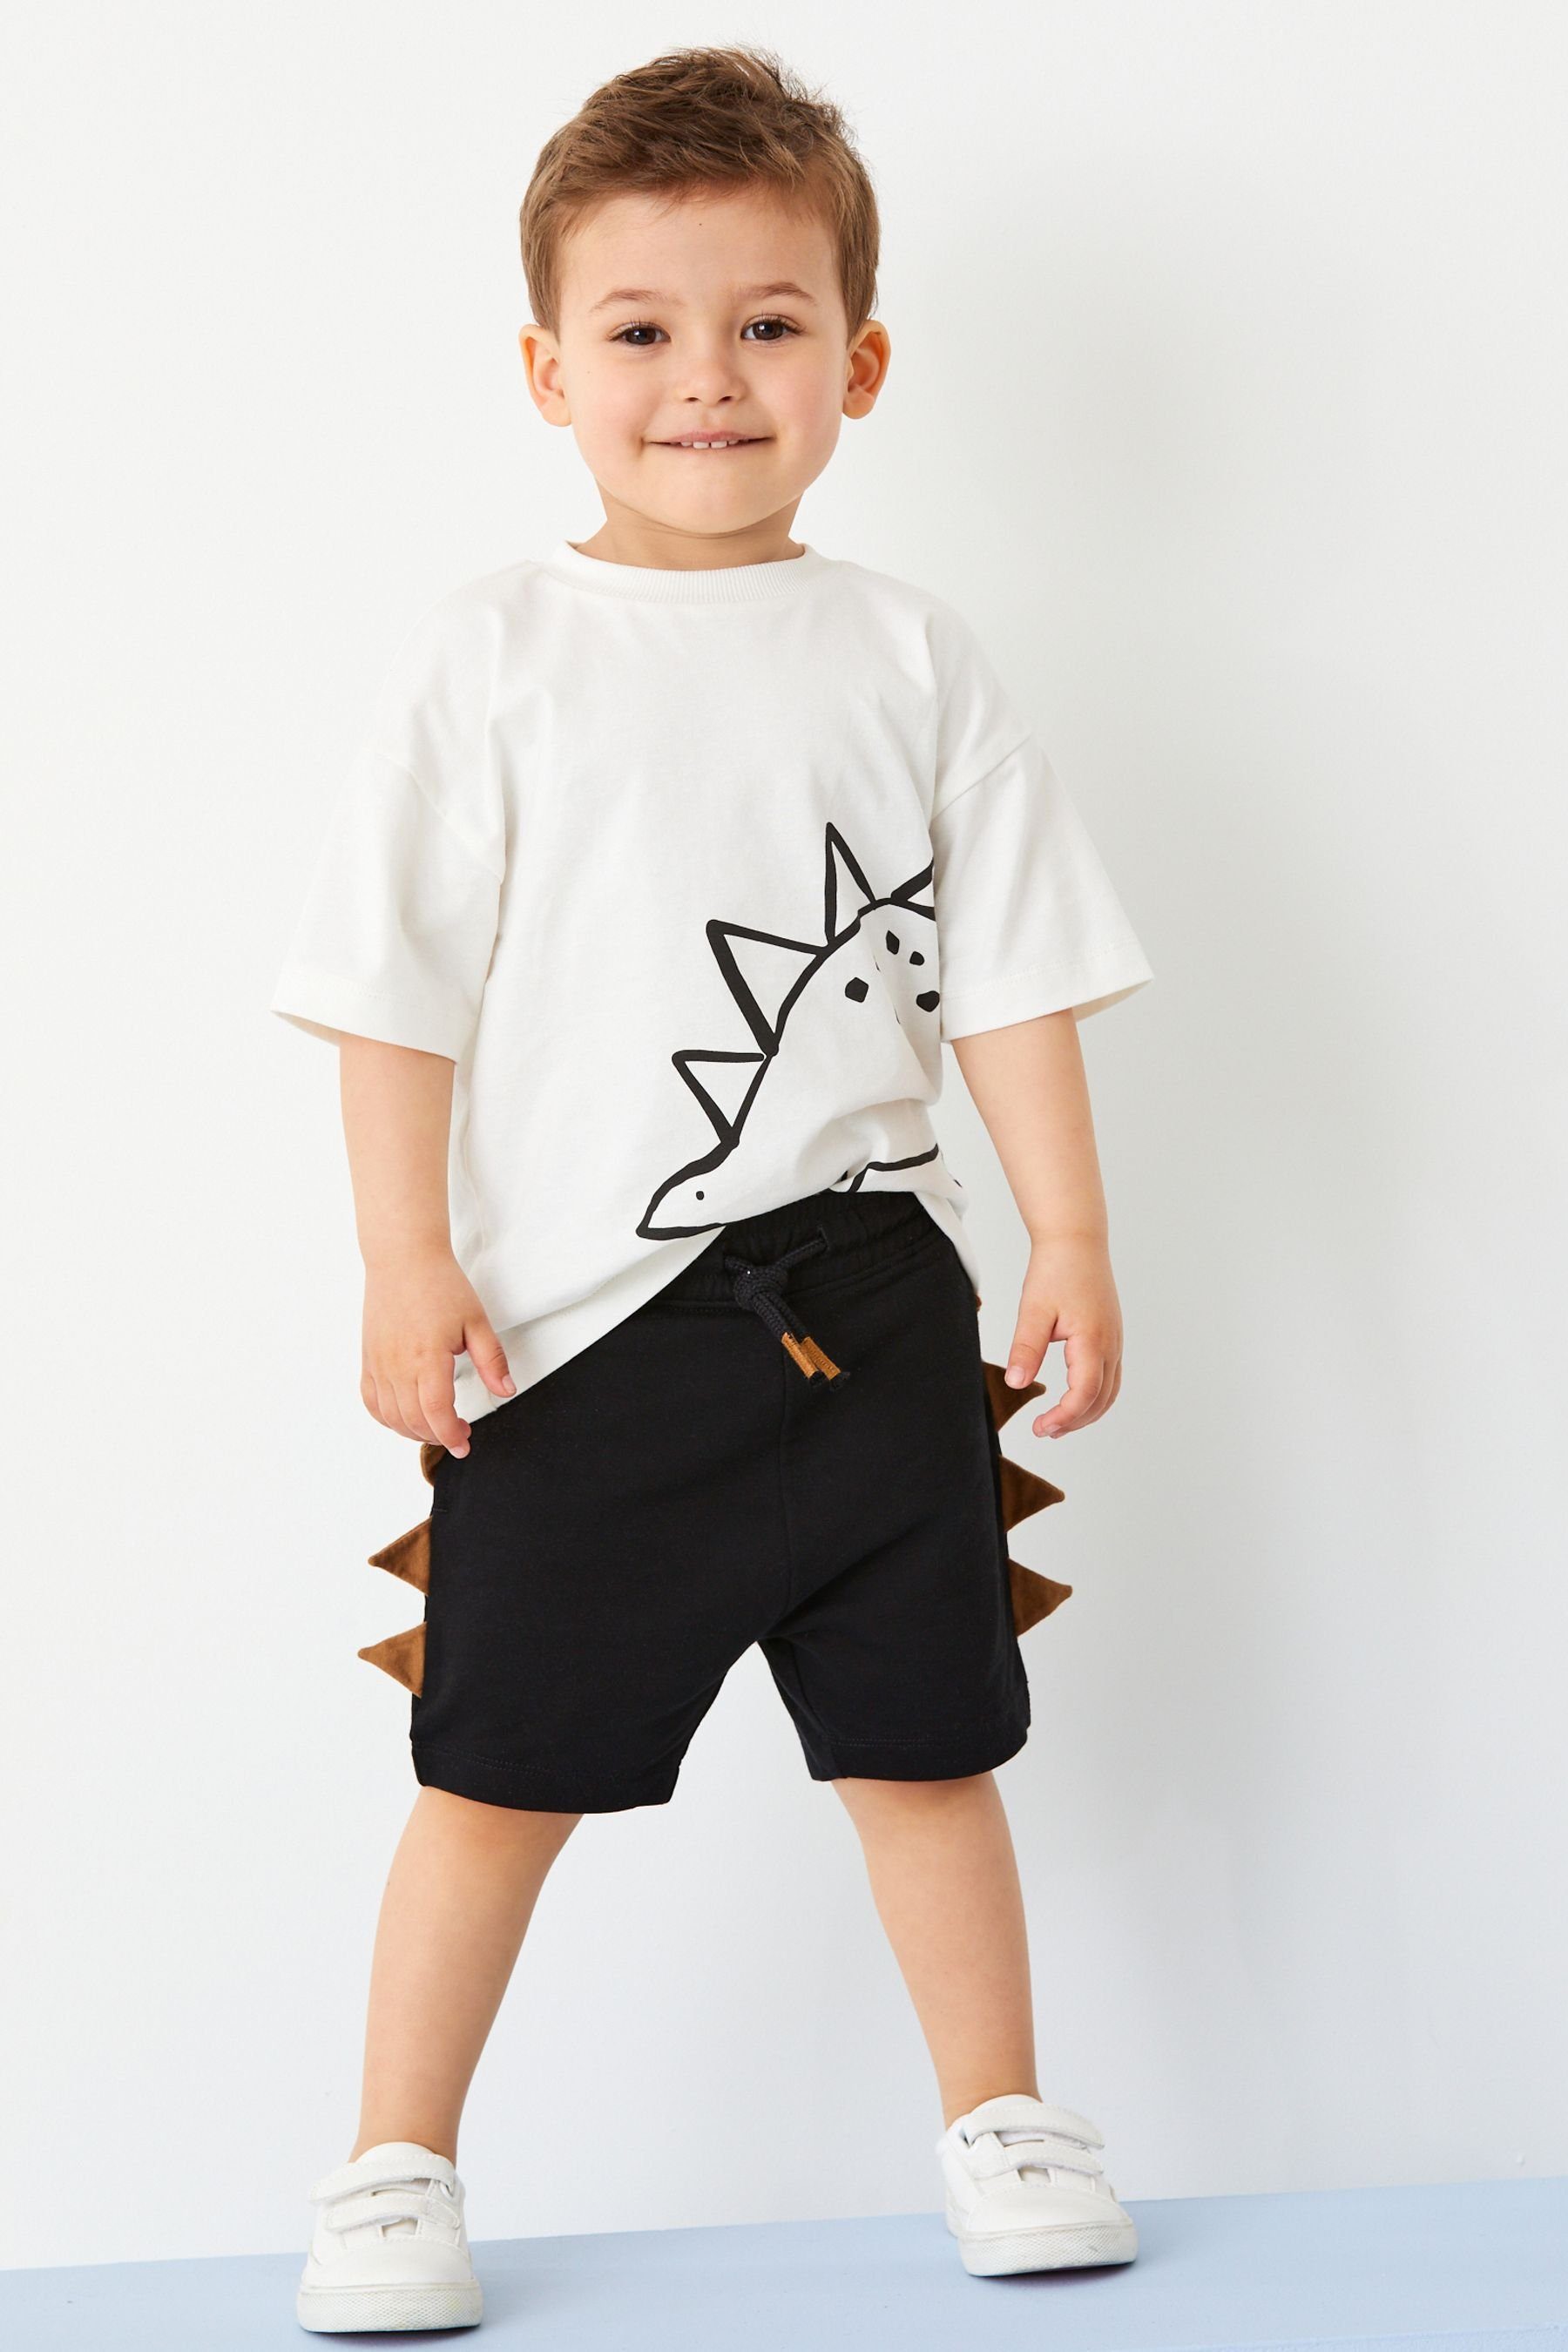 Next Shirt & Hose Set T-Shirts And Black/Tan Sleeve Shorts Short 4-teiliges (4-tlg) Brown